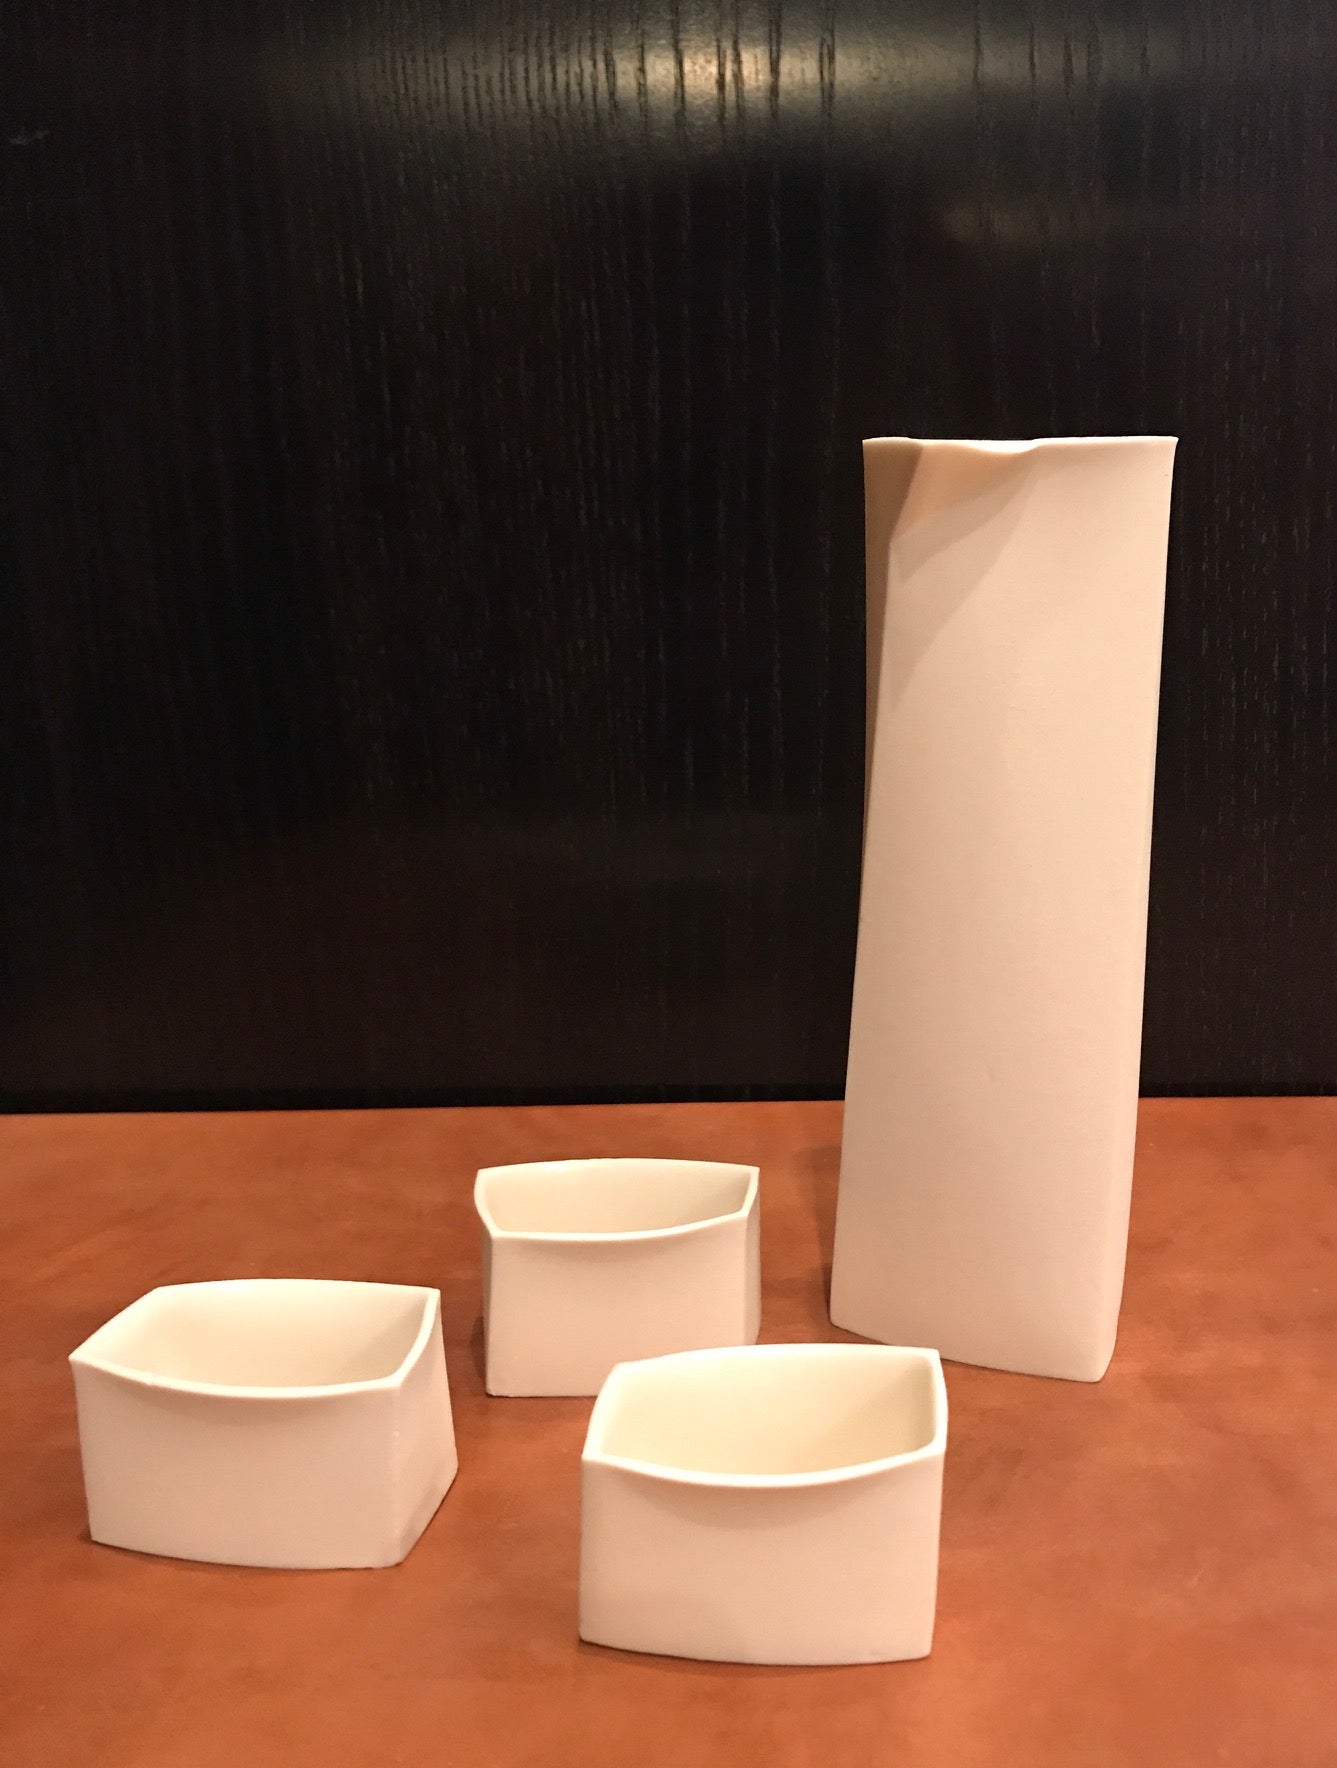 No. 4 Slipcast Sake Set with 3 Cups